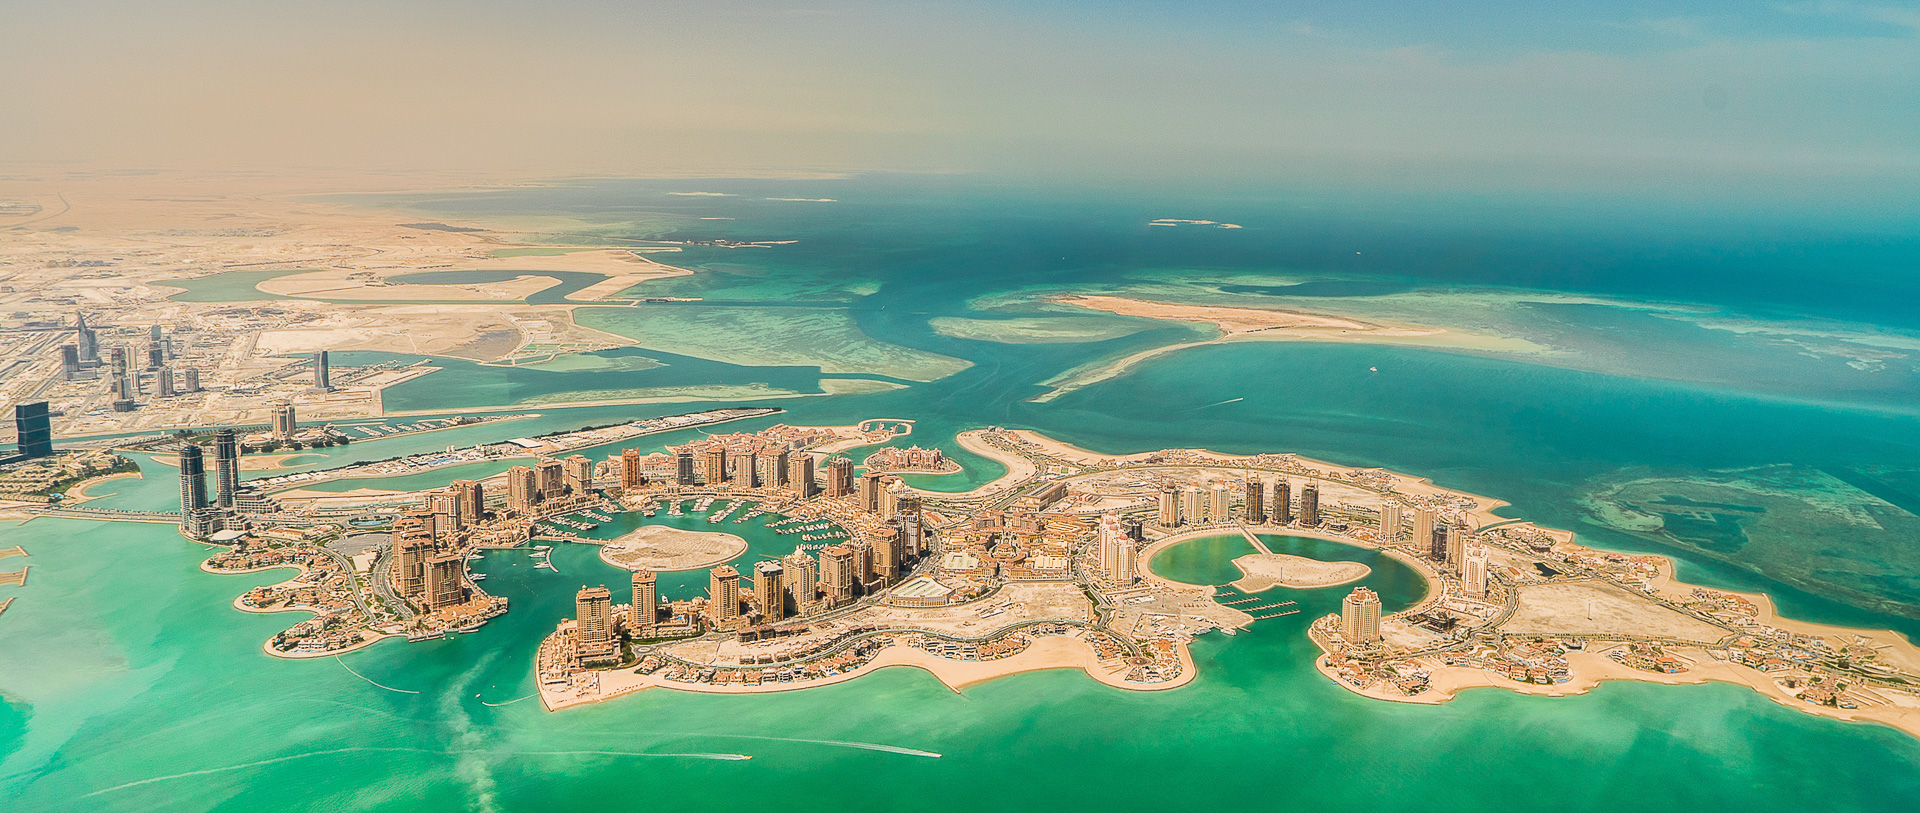 Qatar, aerial image, Doha, Pearl, reclaimed land